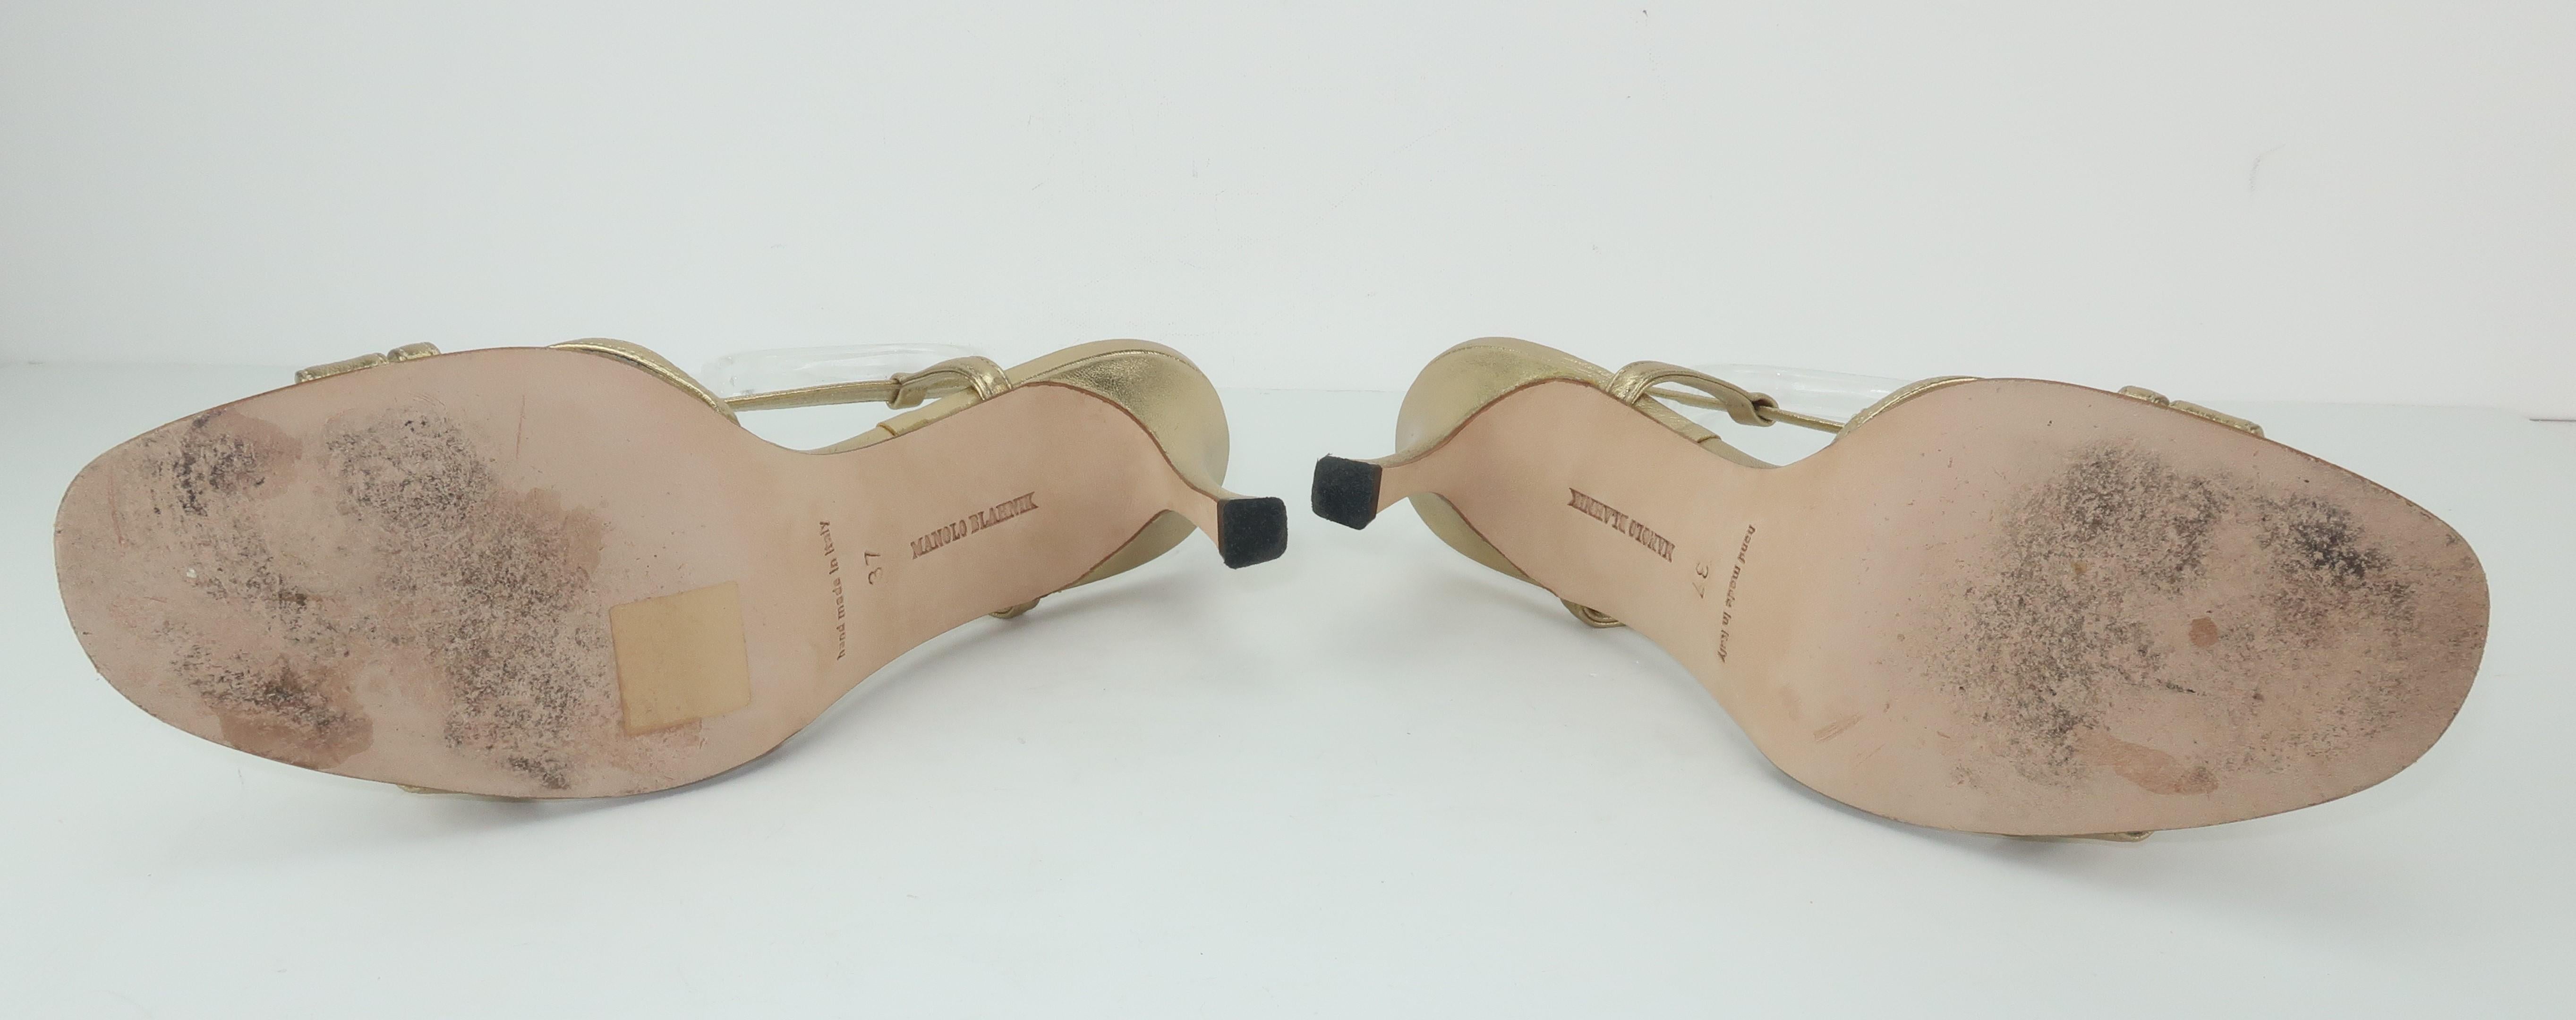 Manolo Blahnik Gold Leather Strappy Sandal Shoes Sz 37 1